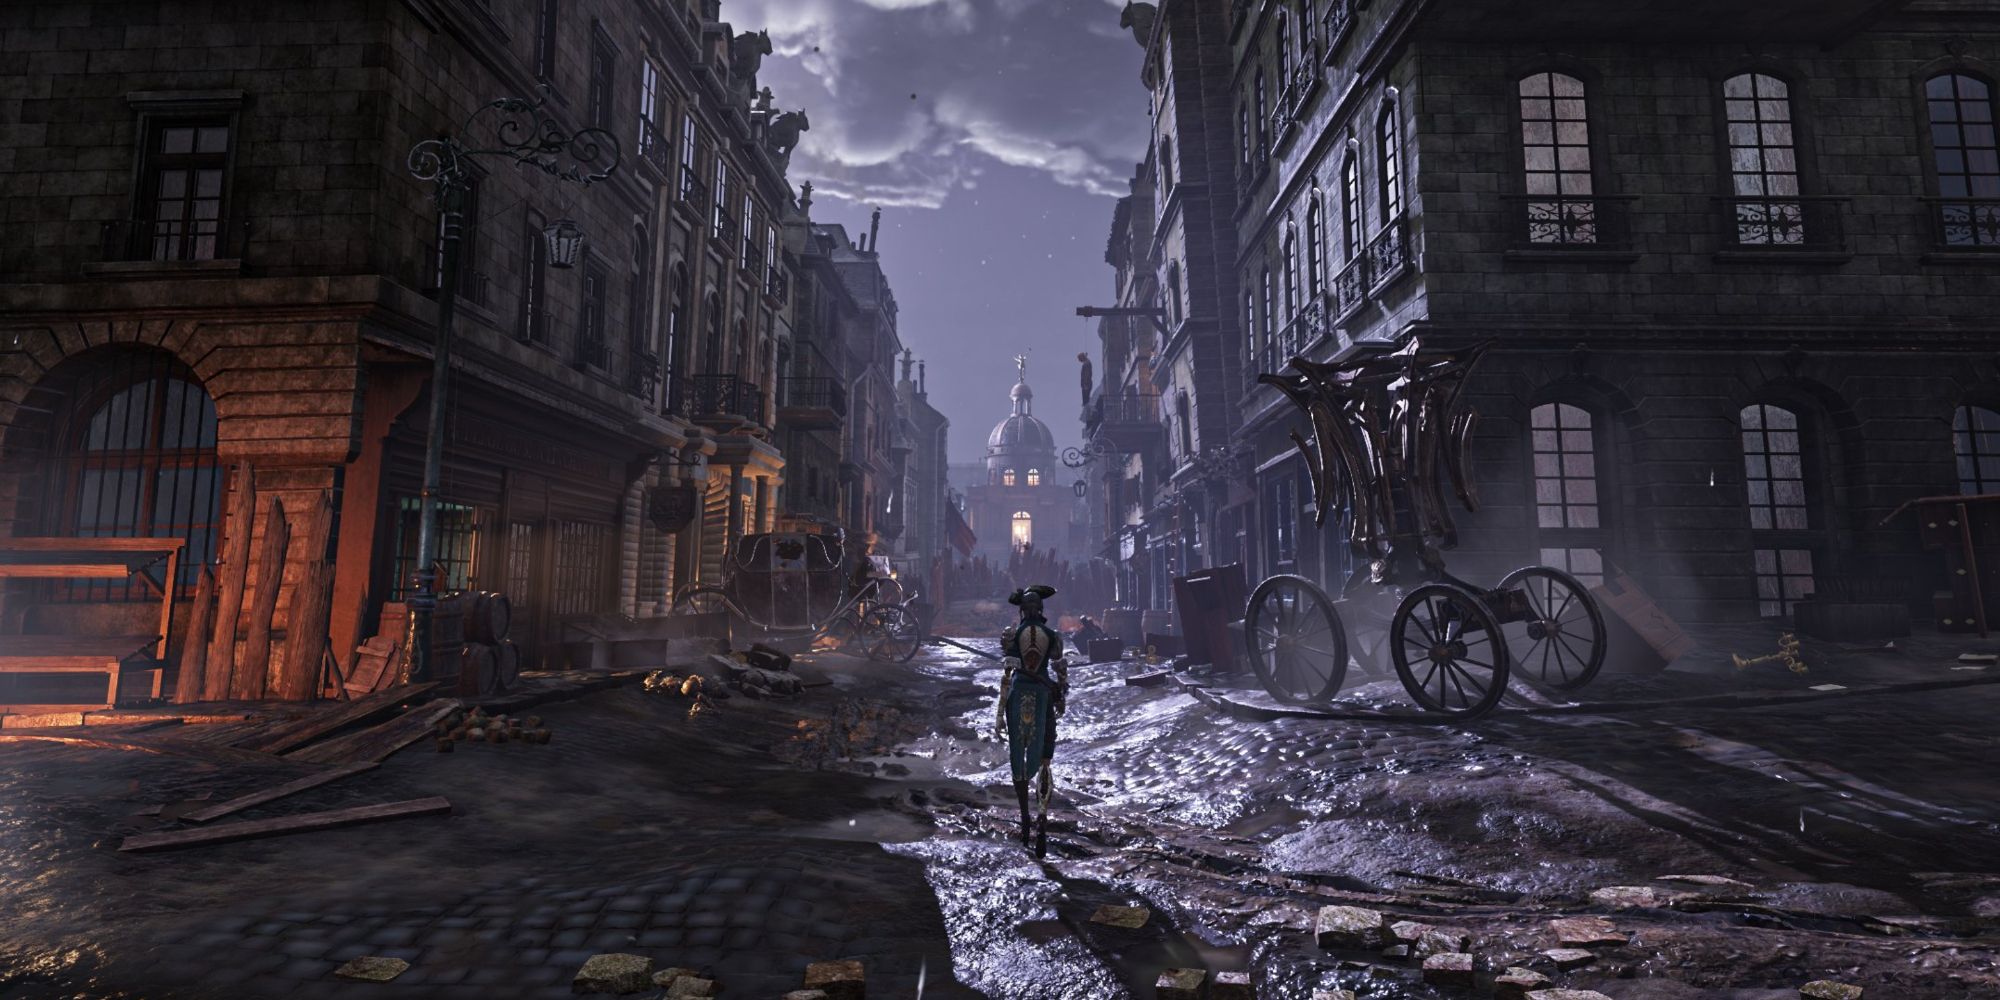 Aegis stands in a dark alley in Steelrising